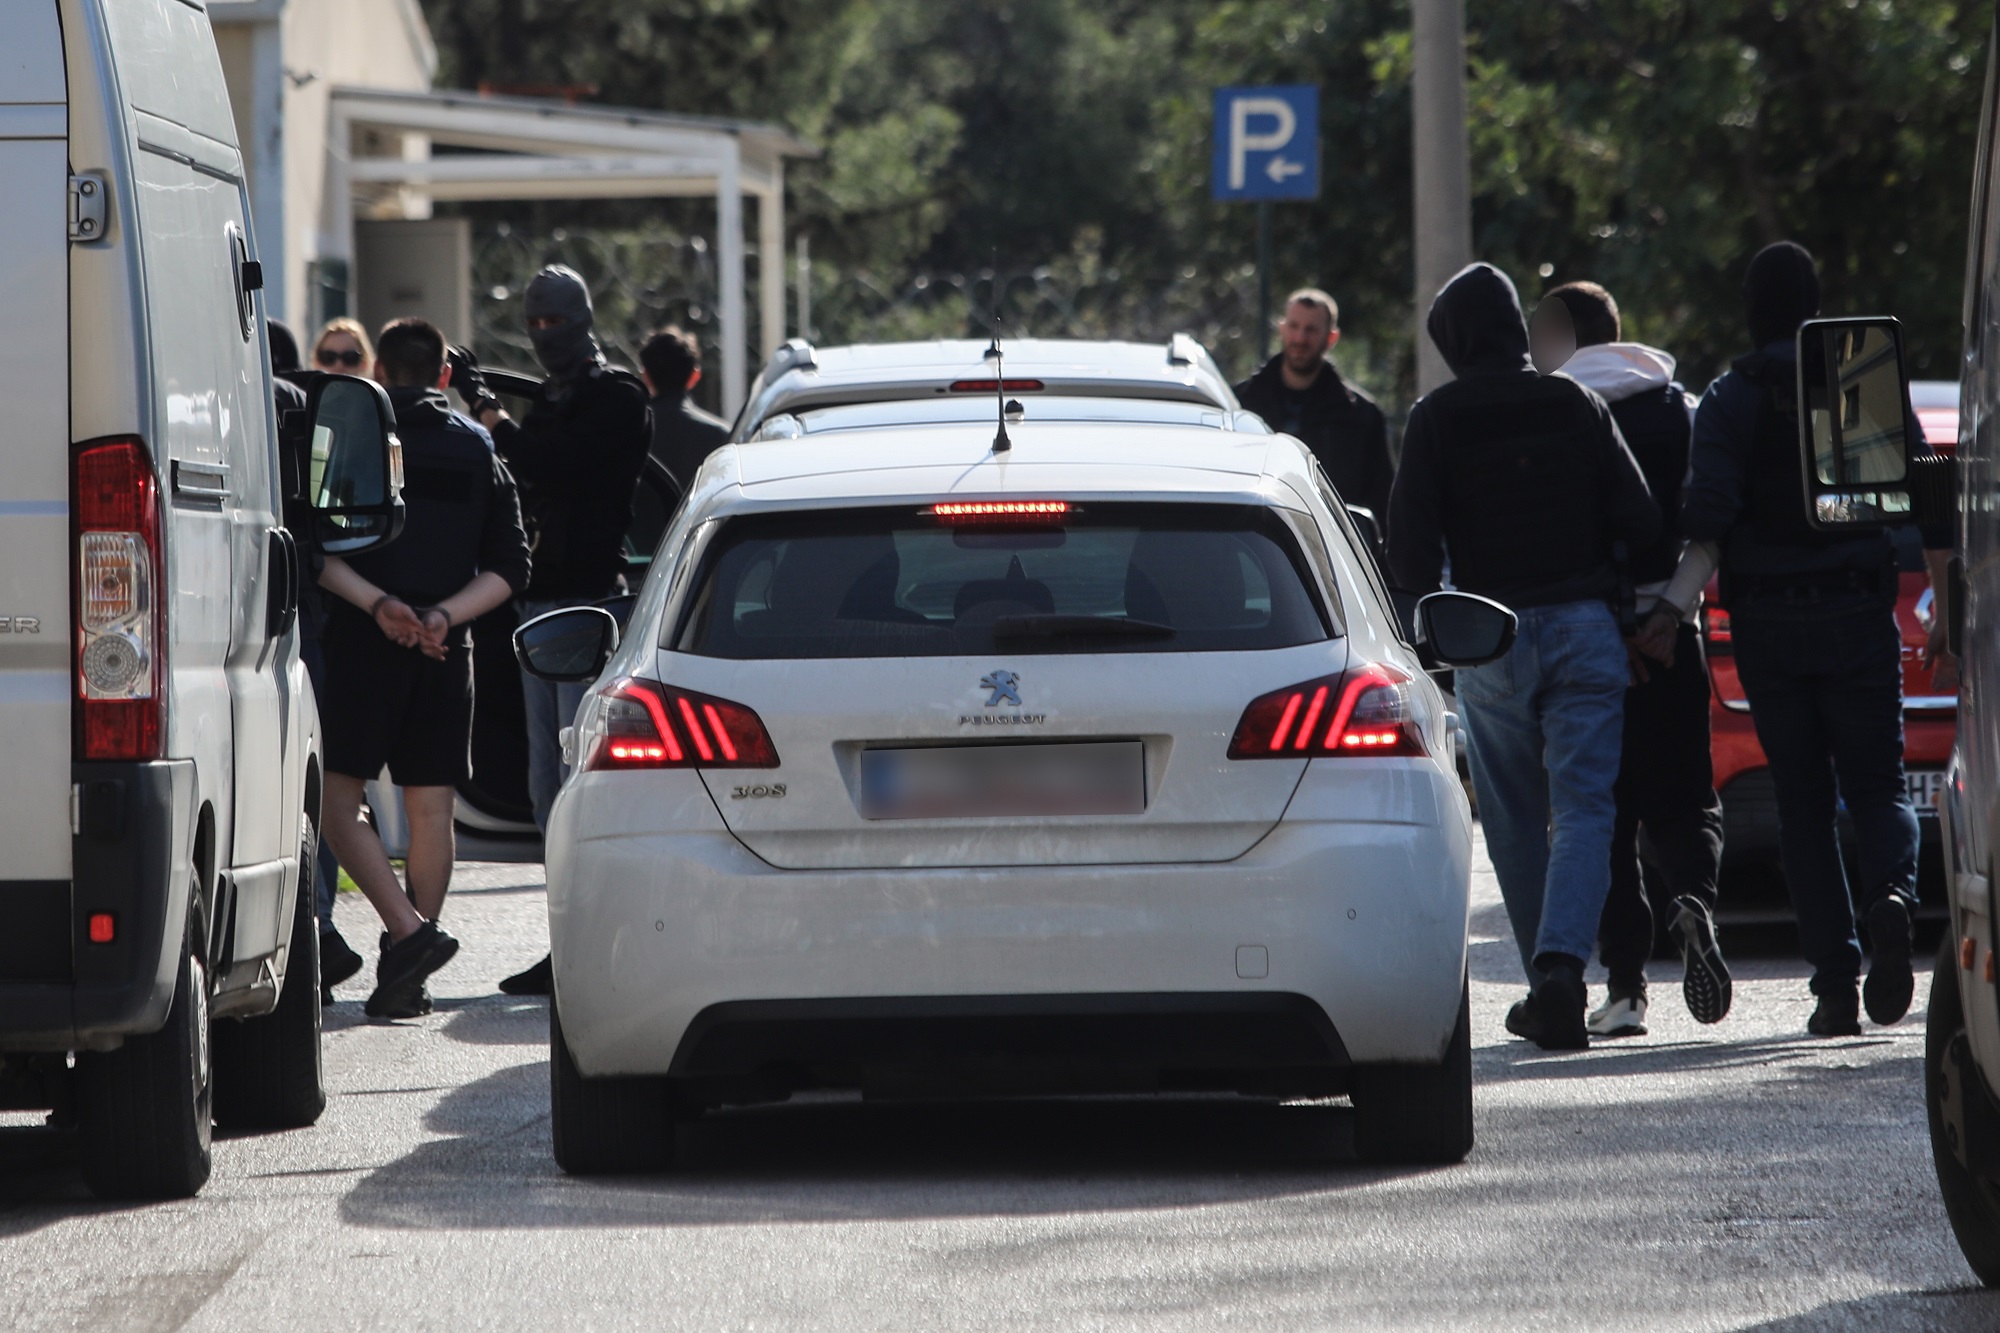 Greek Mafia: Με εννέα κακουργήματα αντιμέτωποι οι δυο συλληφθέντες – «Κλέβω, πυροβολάω, σκοτώνω»